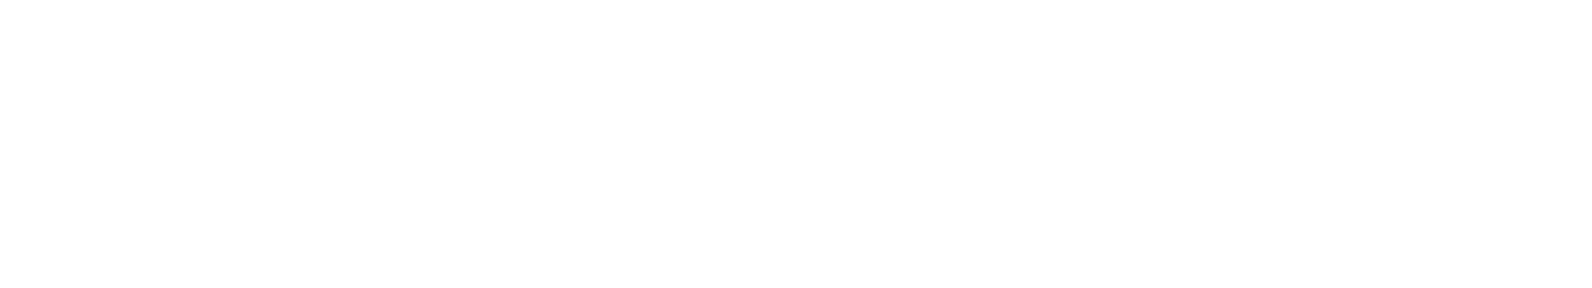 Persimmon logo large for dark backgrounds (transparent PNG)